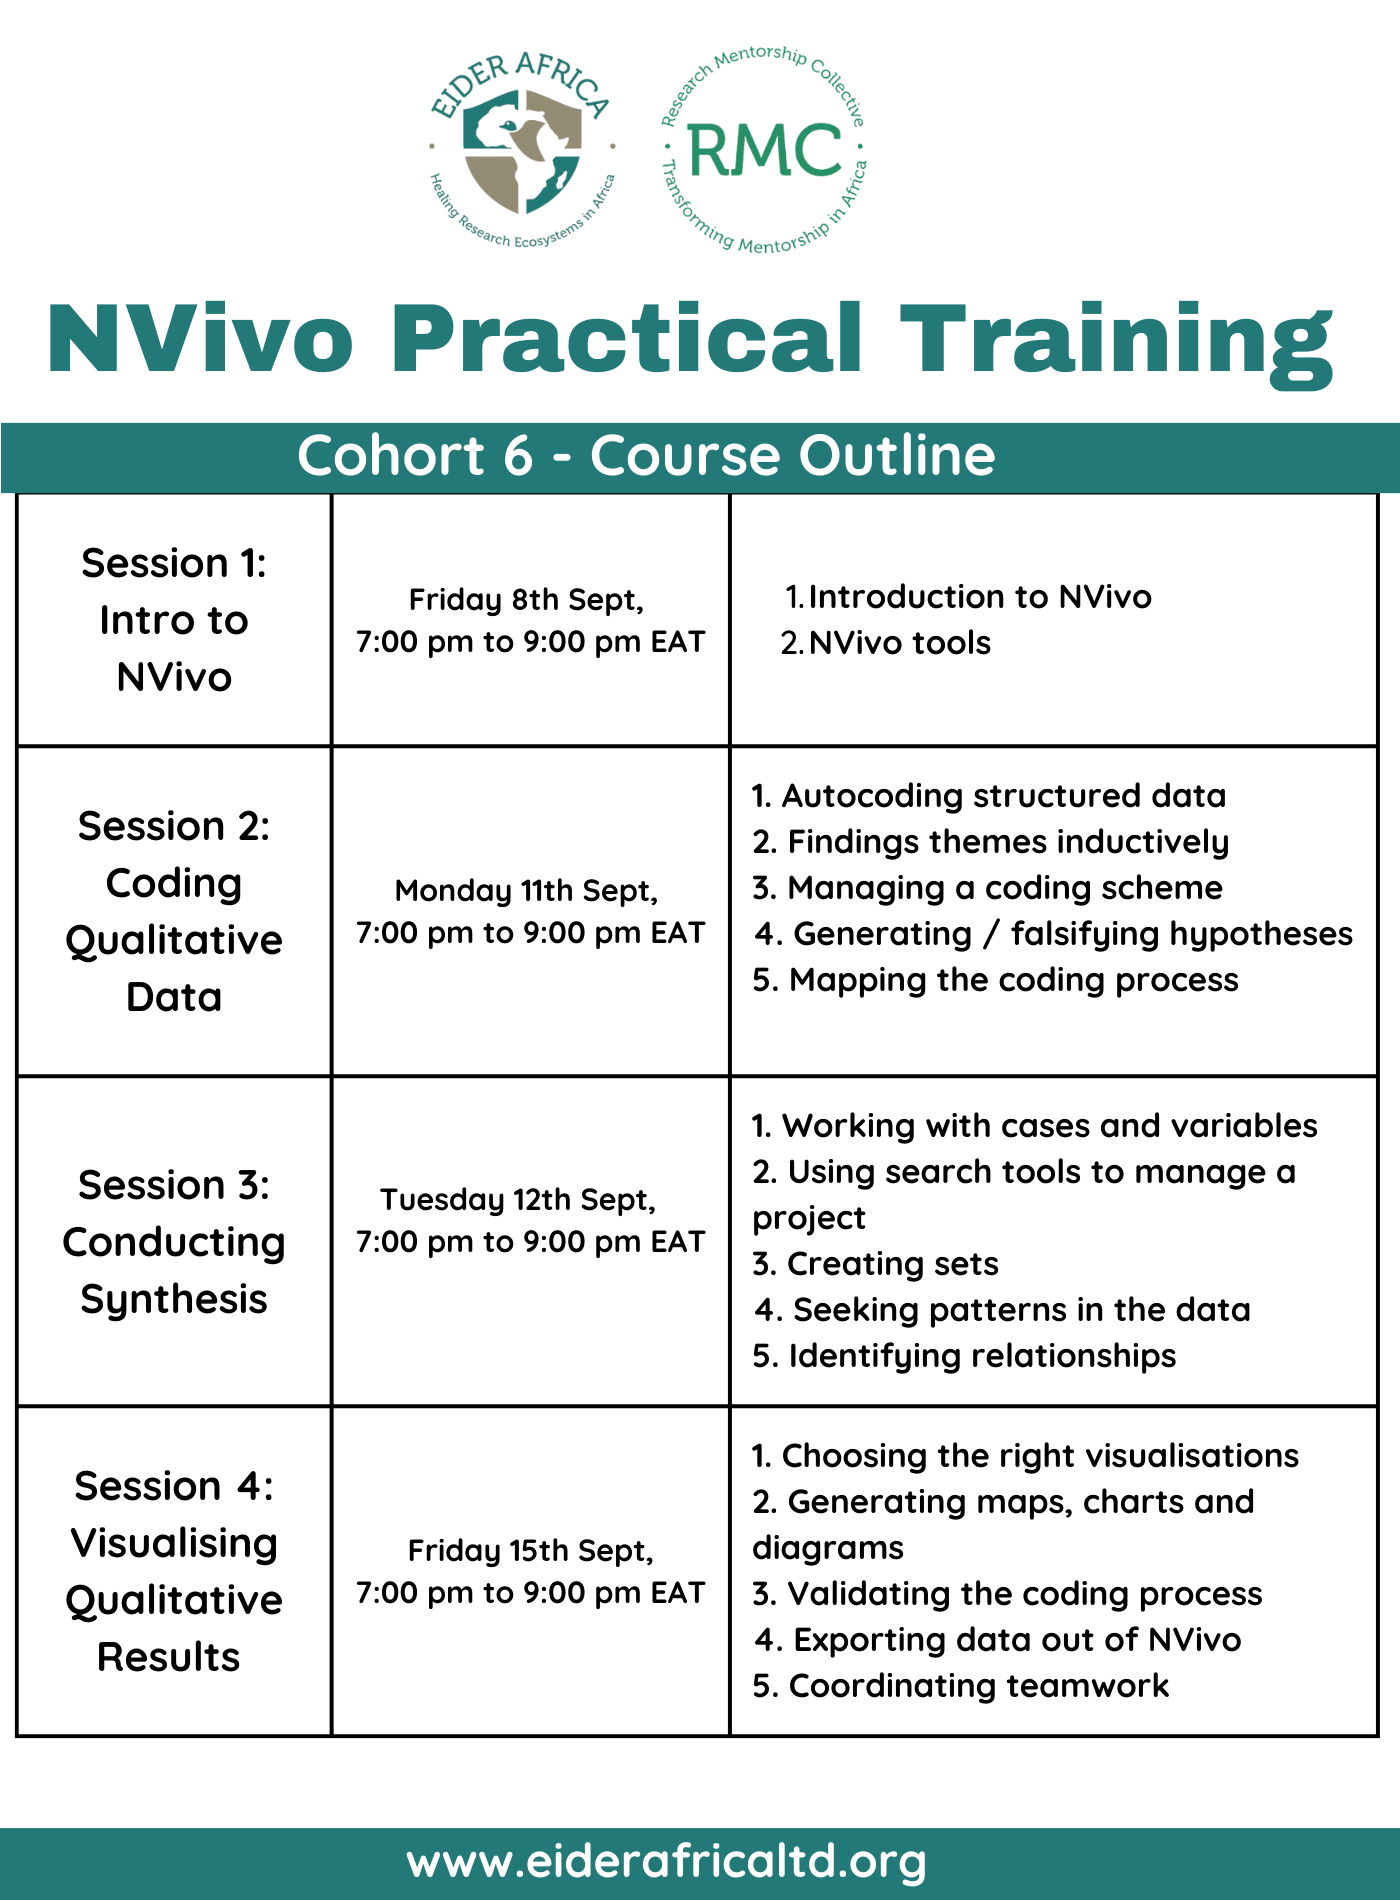 NVivo Cohort 6 Course Outline